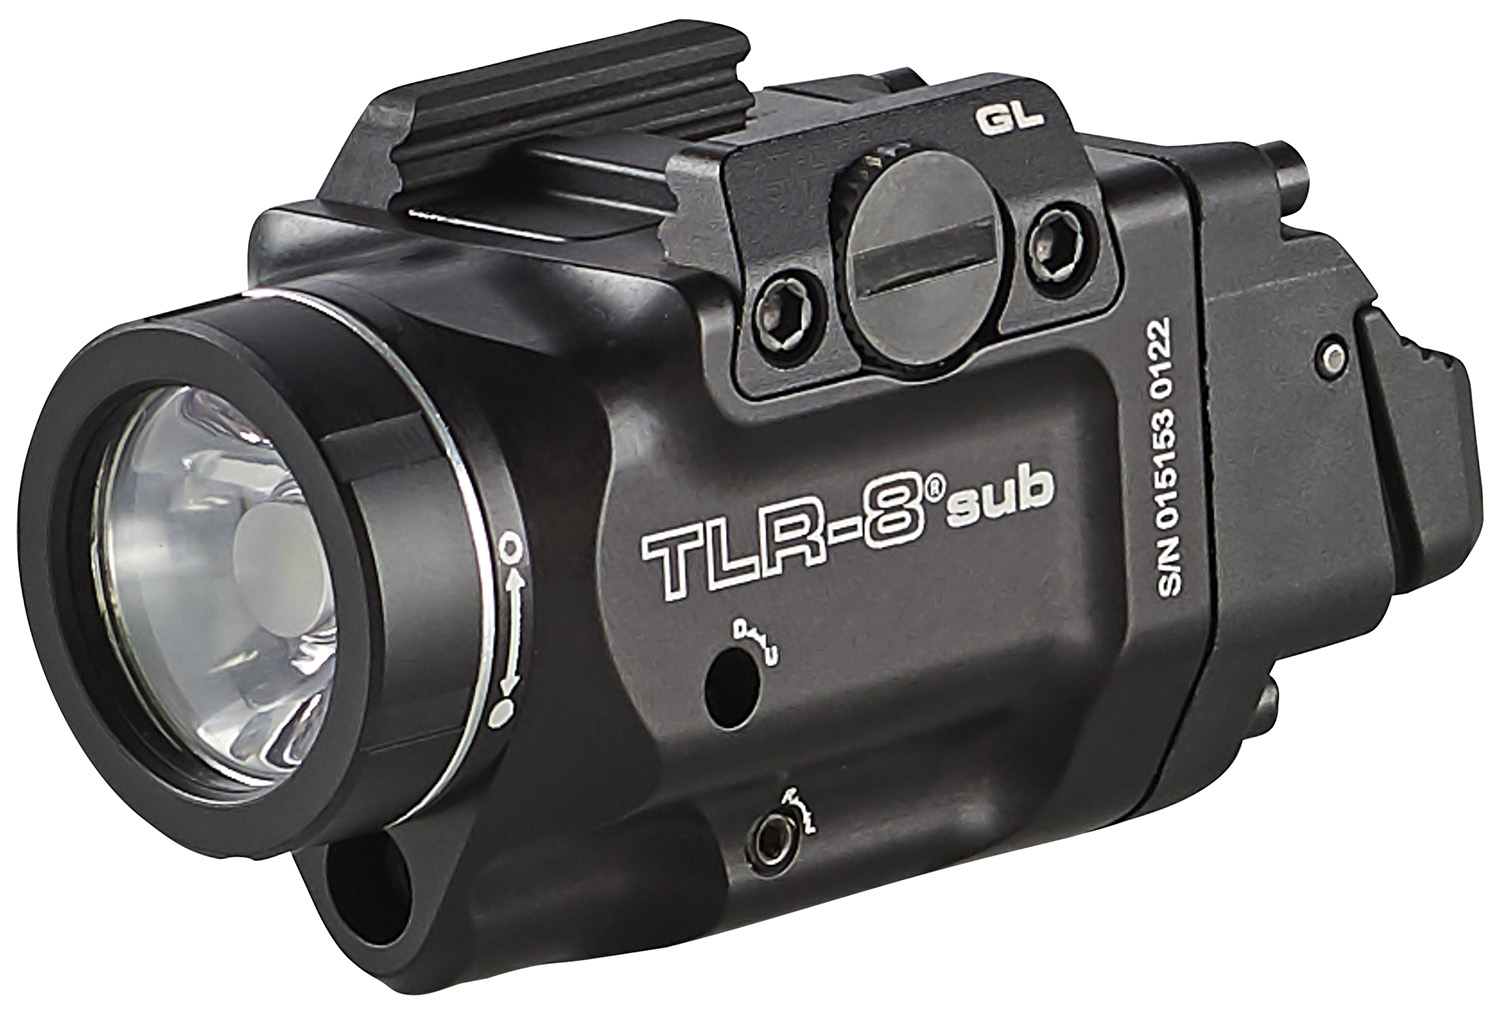 Streamlight 69411 TLR-8 Sub W/Laser Red Laser 500 Lumens, 640-660Nm Wavelength, Black 141 Meters Beam Distance, Fits Glo